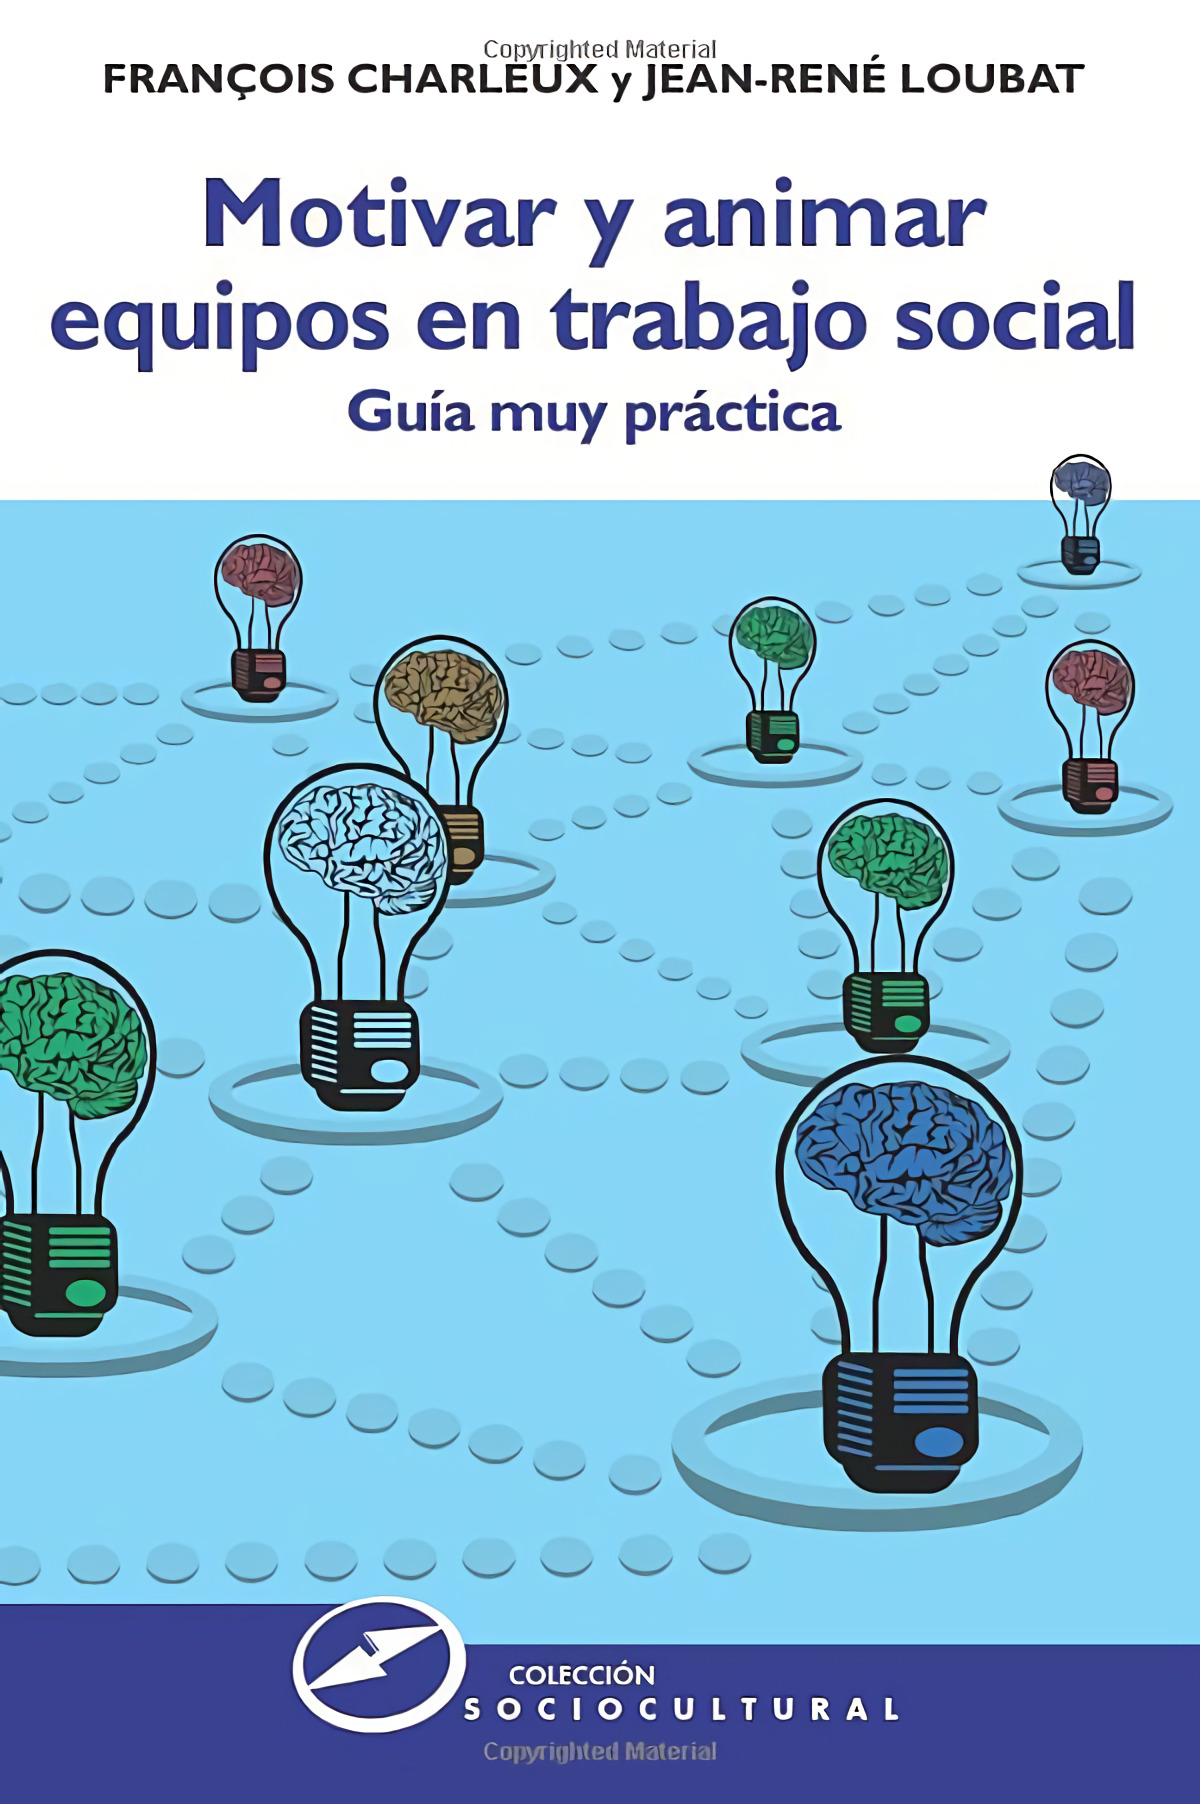 Motivar y animar equipos trabajo social guia muy practica - Charleux, FranÇois/Loubat, Jean-René